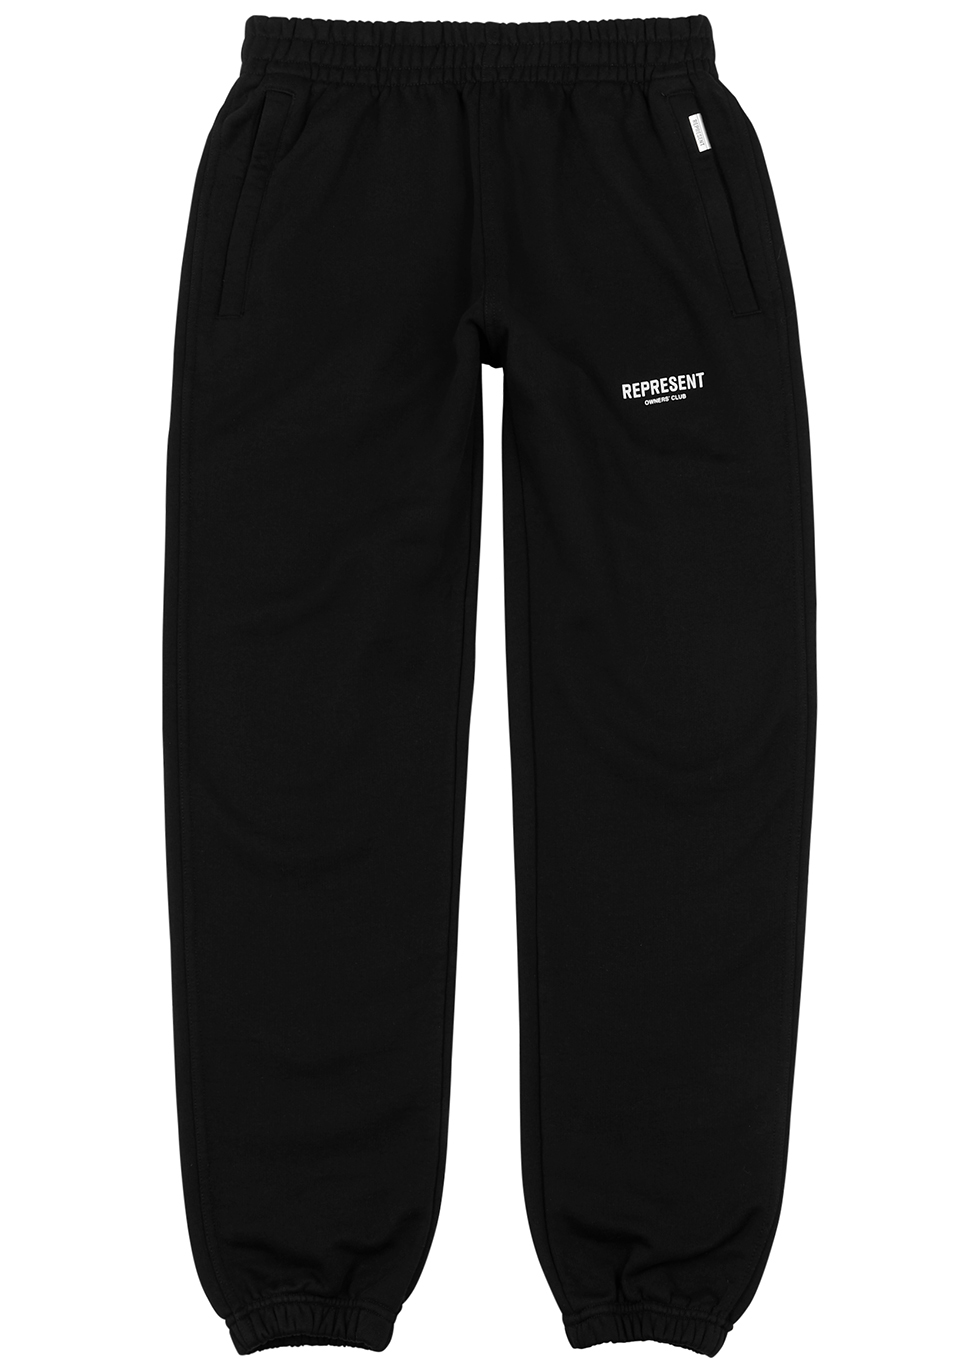 Represent Owners Club logo cotton sweatpants - Harvey Nichols